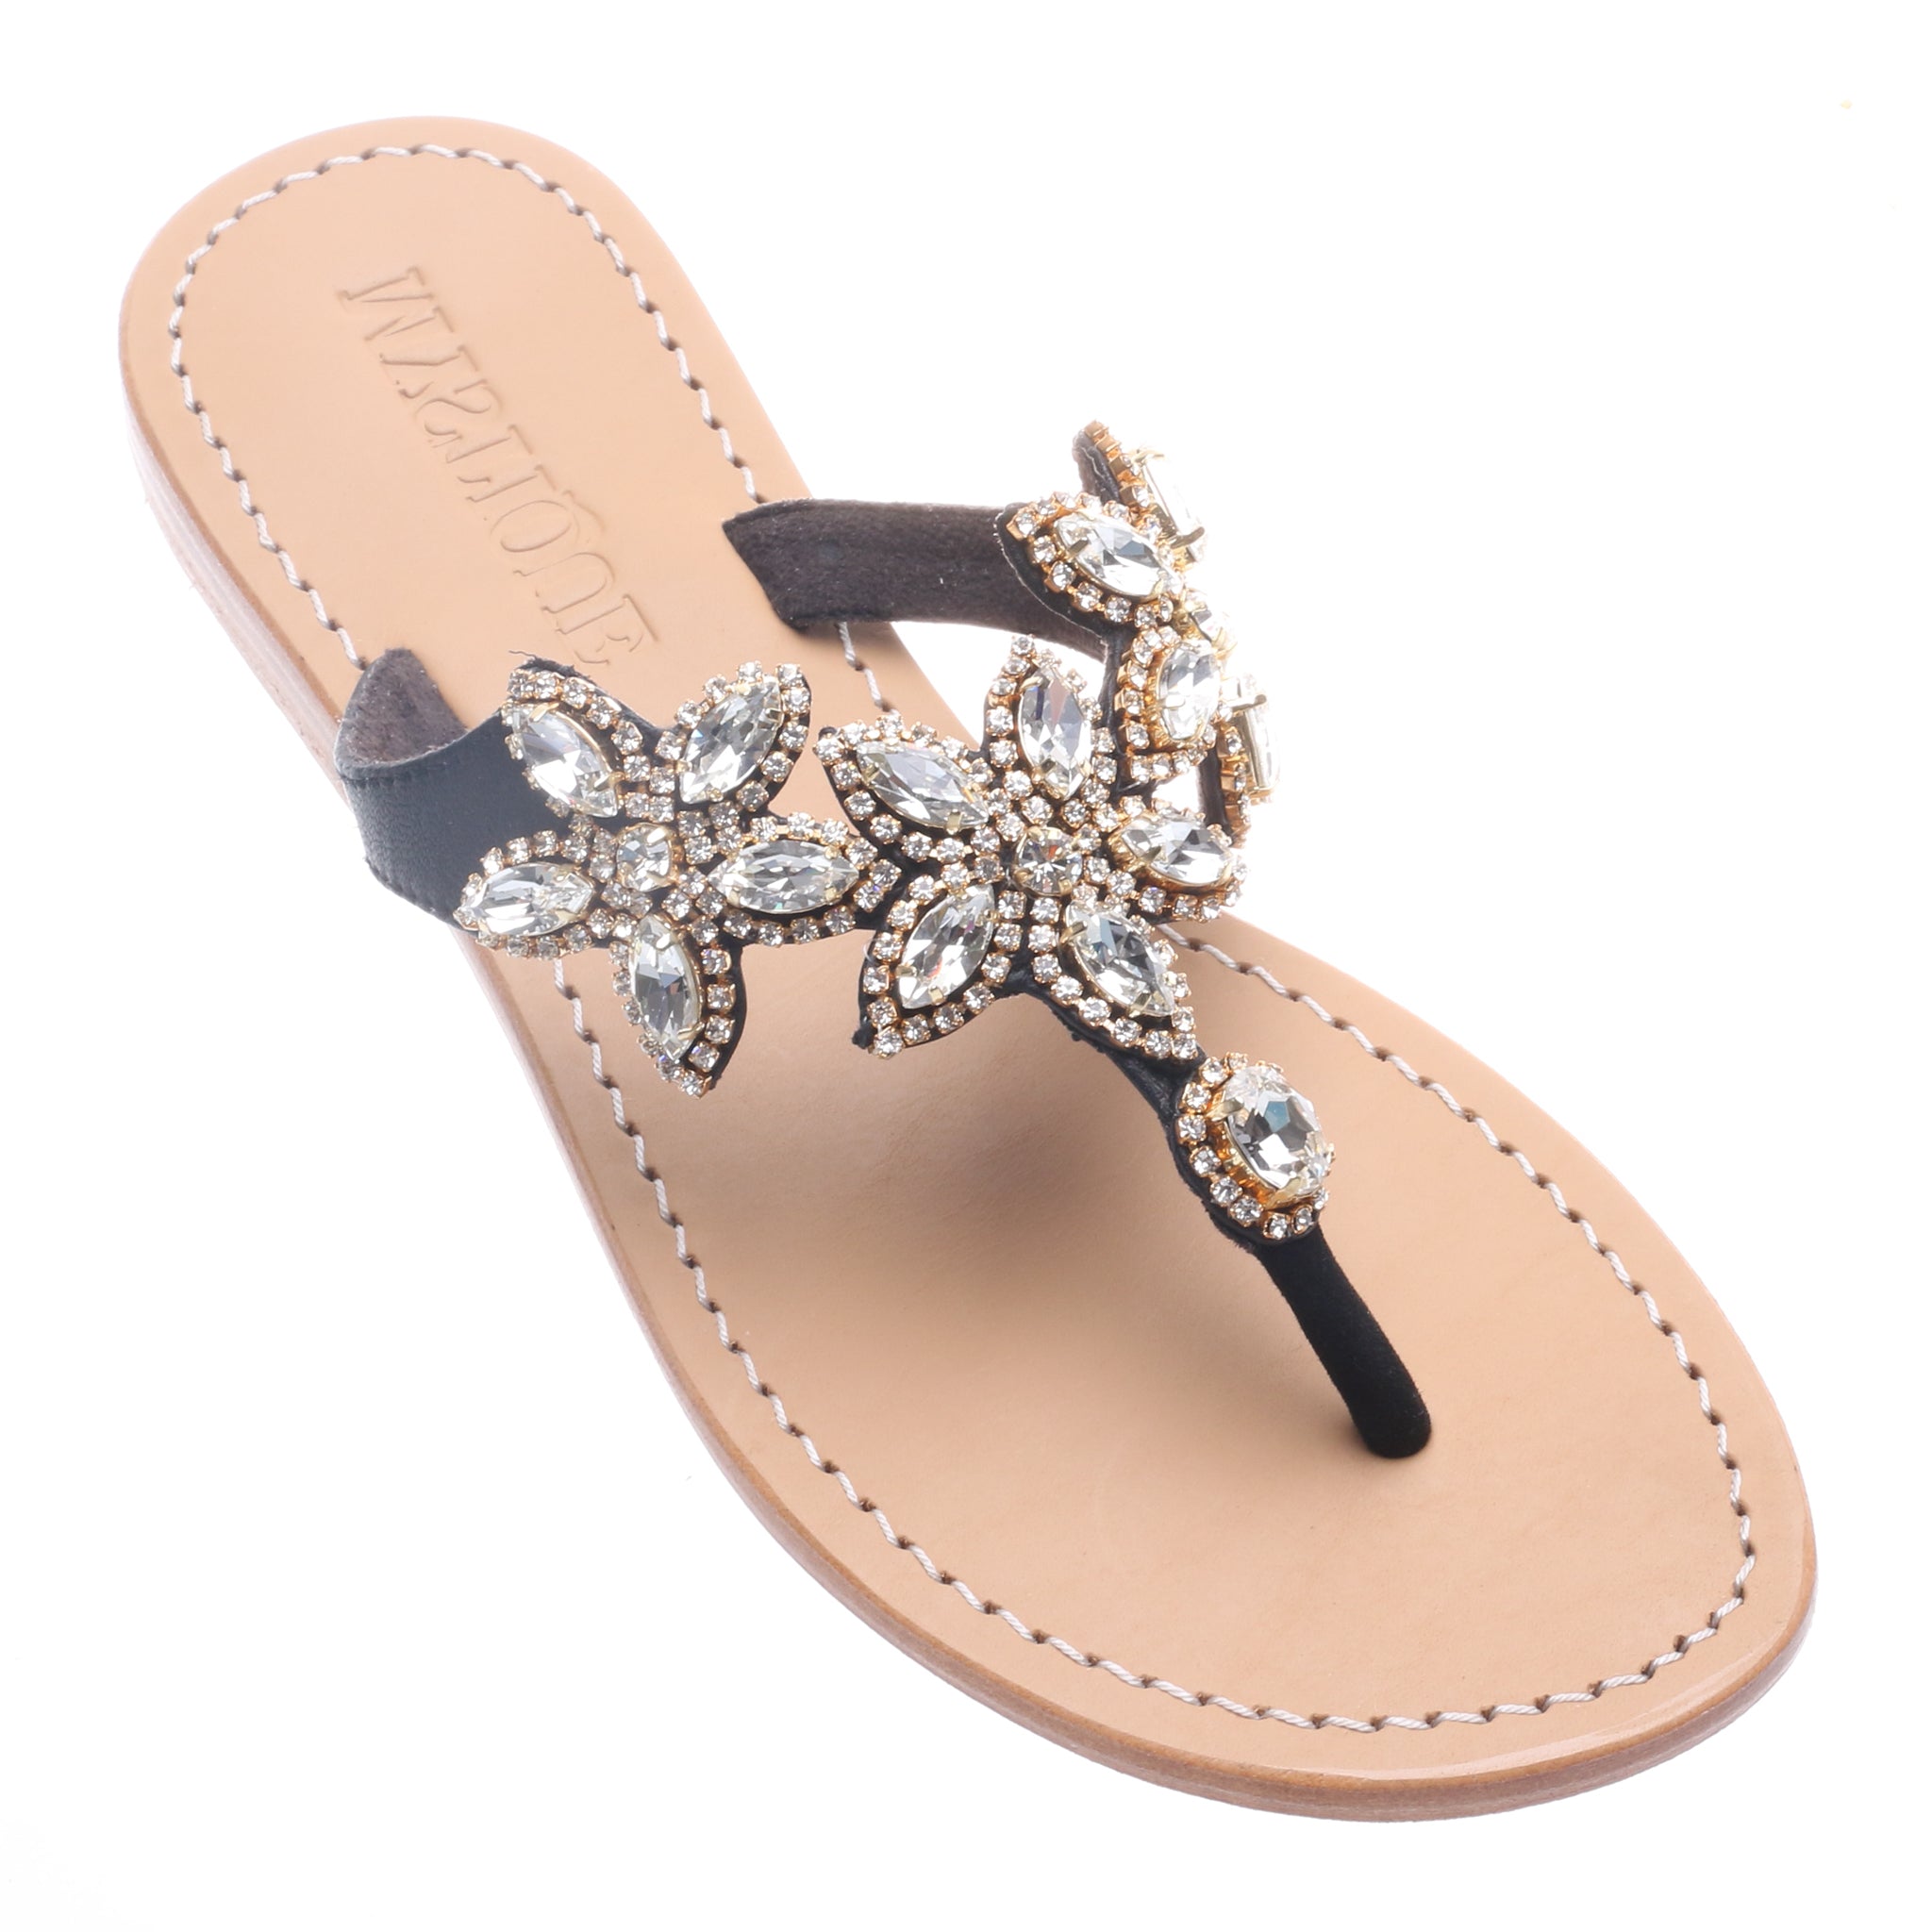 Women's Handmade Jeweled Leather Sandals - Mystique Sandals